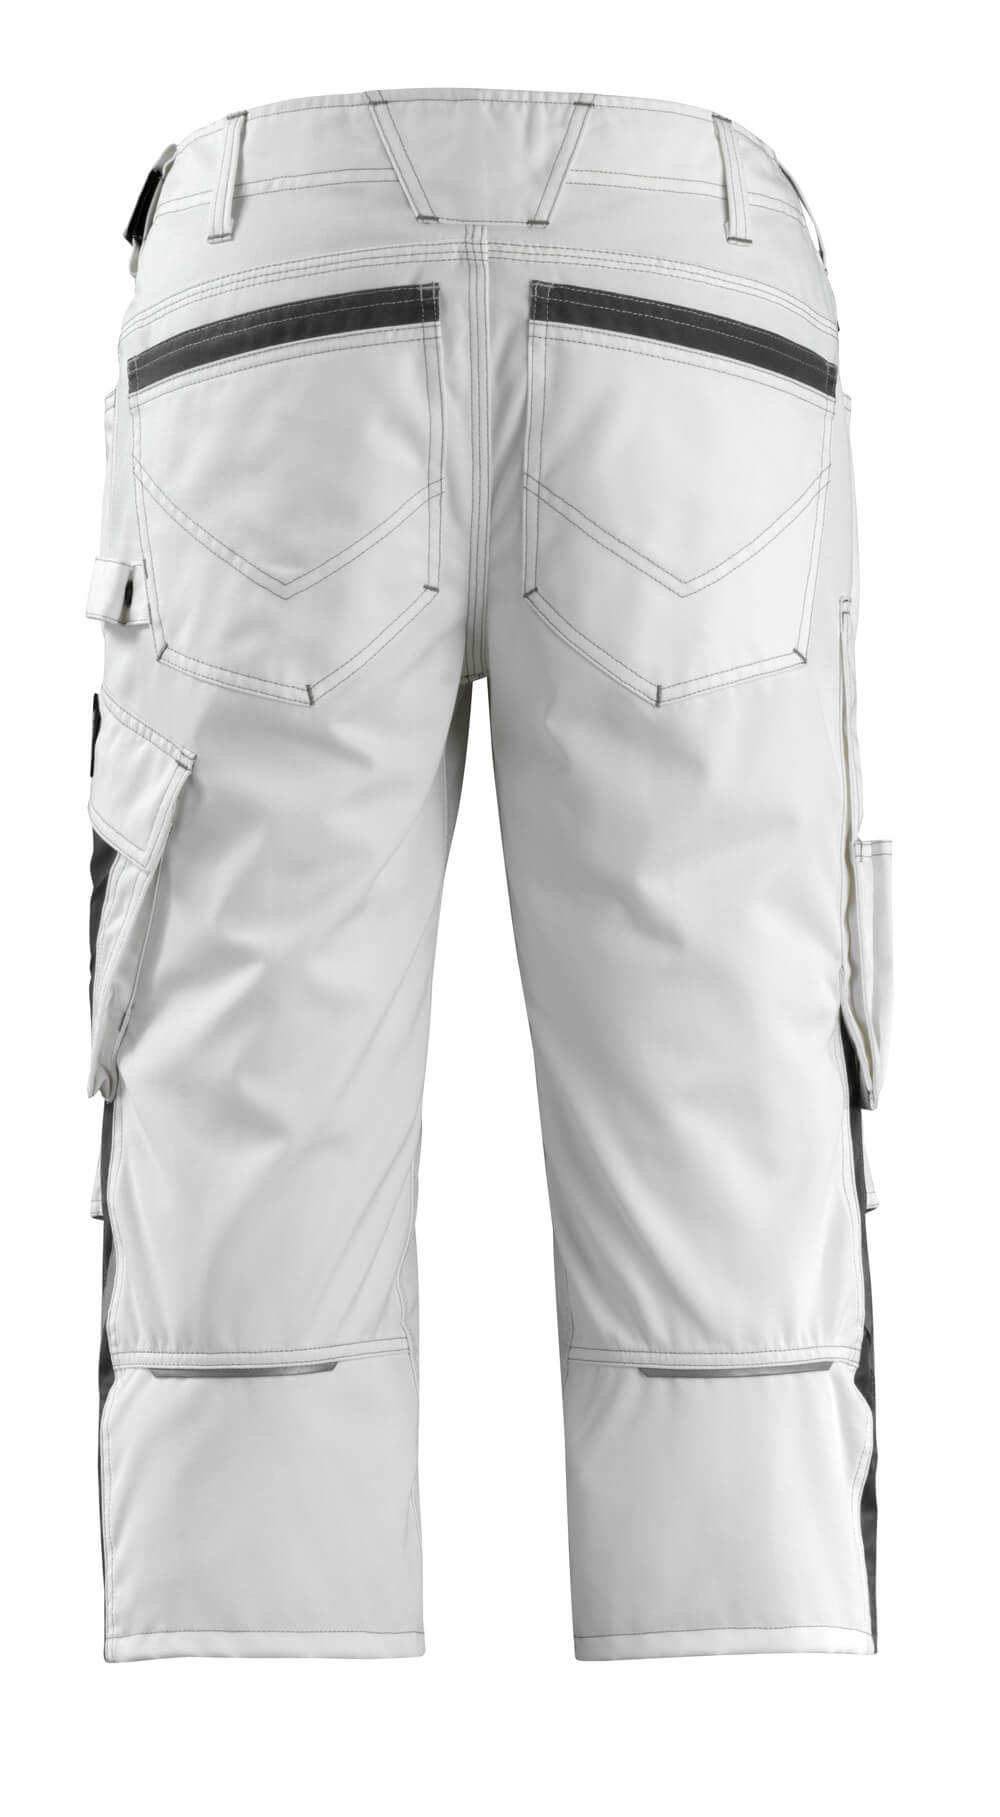 Mascot UNIQUE  Altona ¾ Length Trousers with kneepad pockets 14149 white/dark anthracite